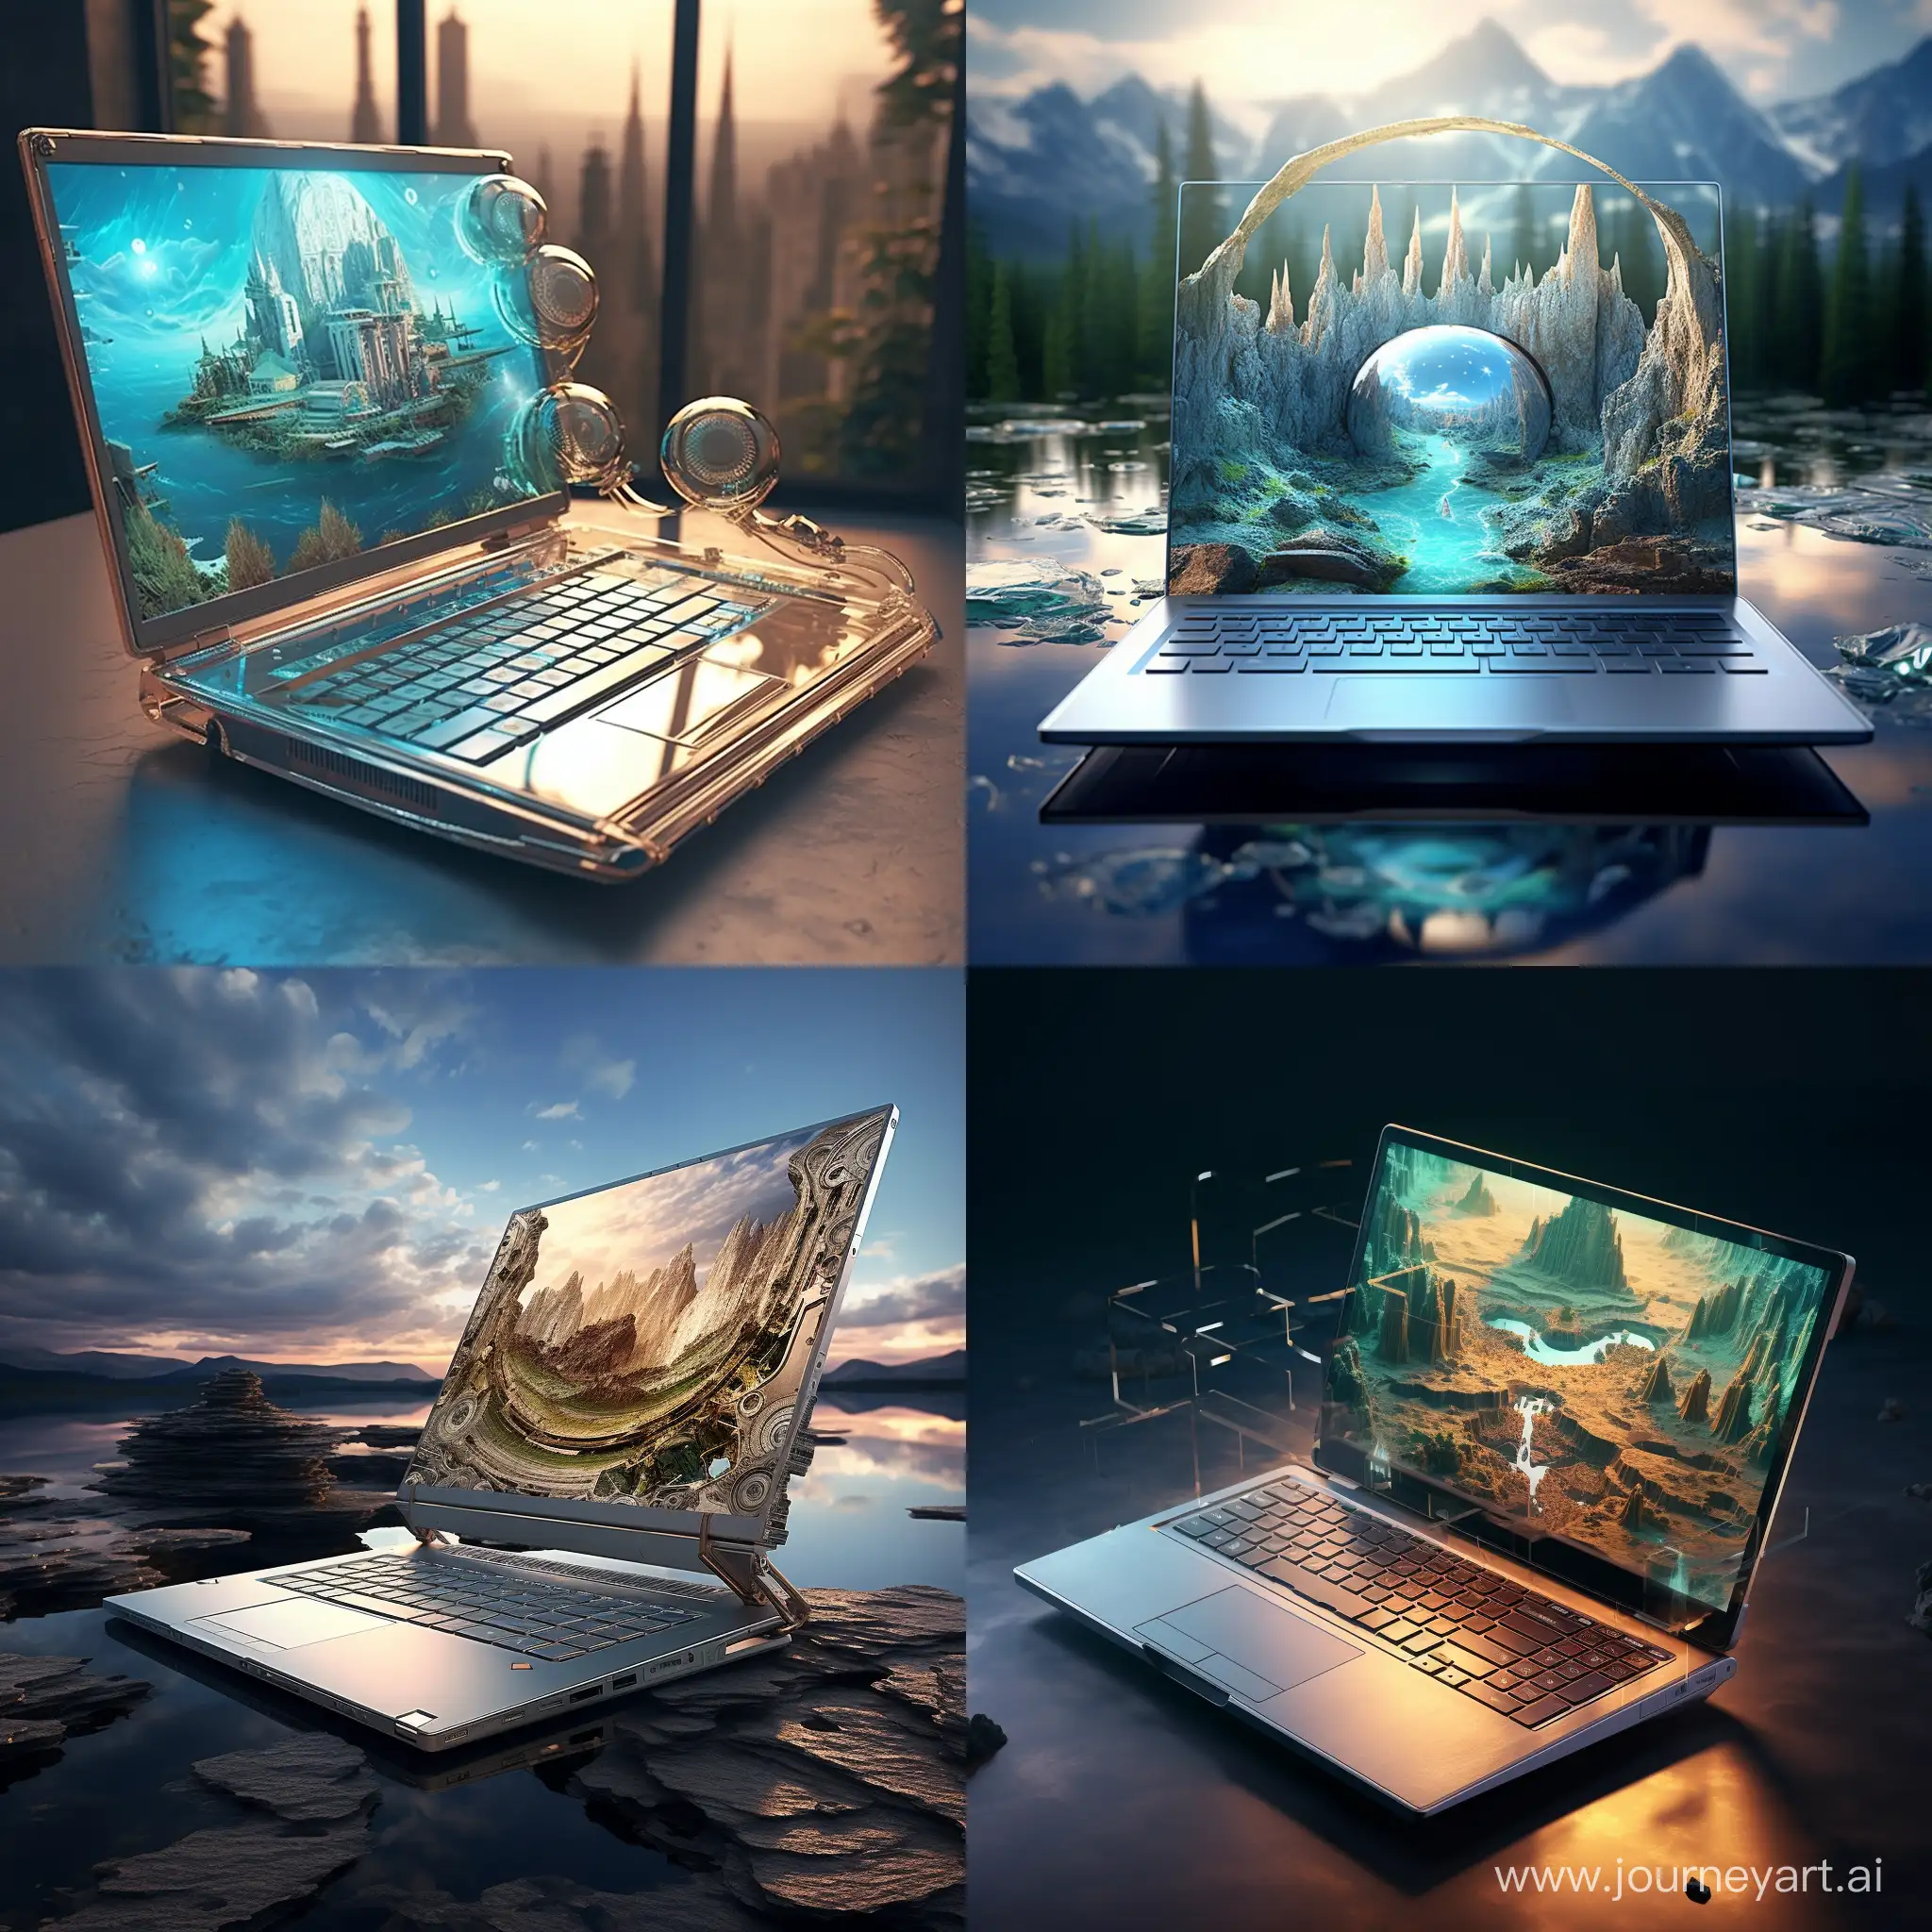 Futuristic-Laptop-in-a-Technologically-Advanced-World